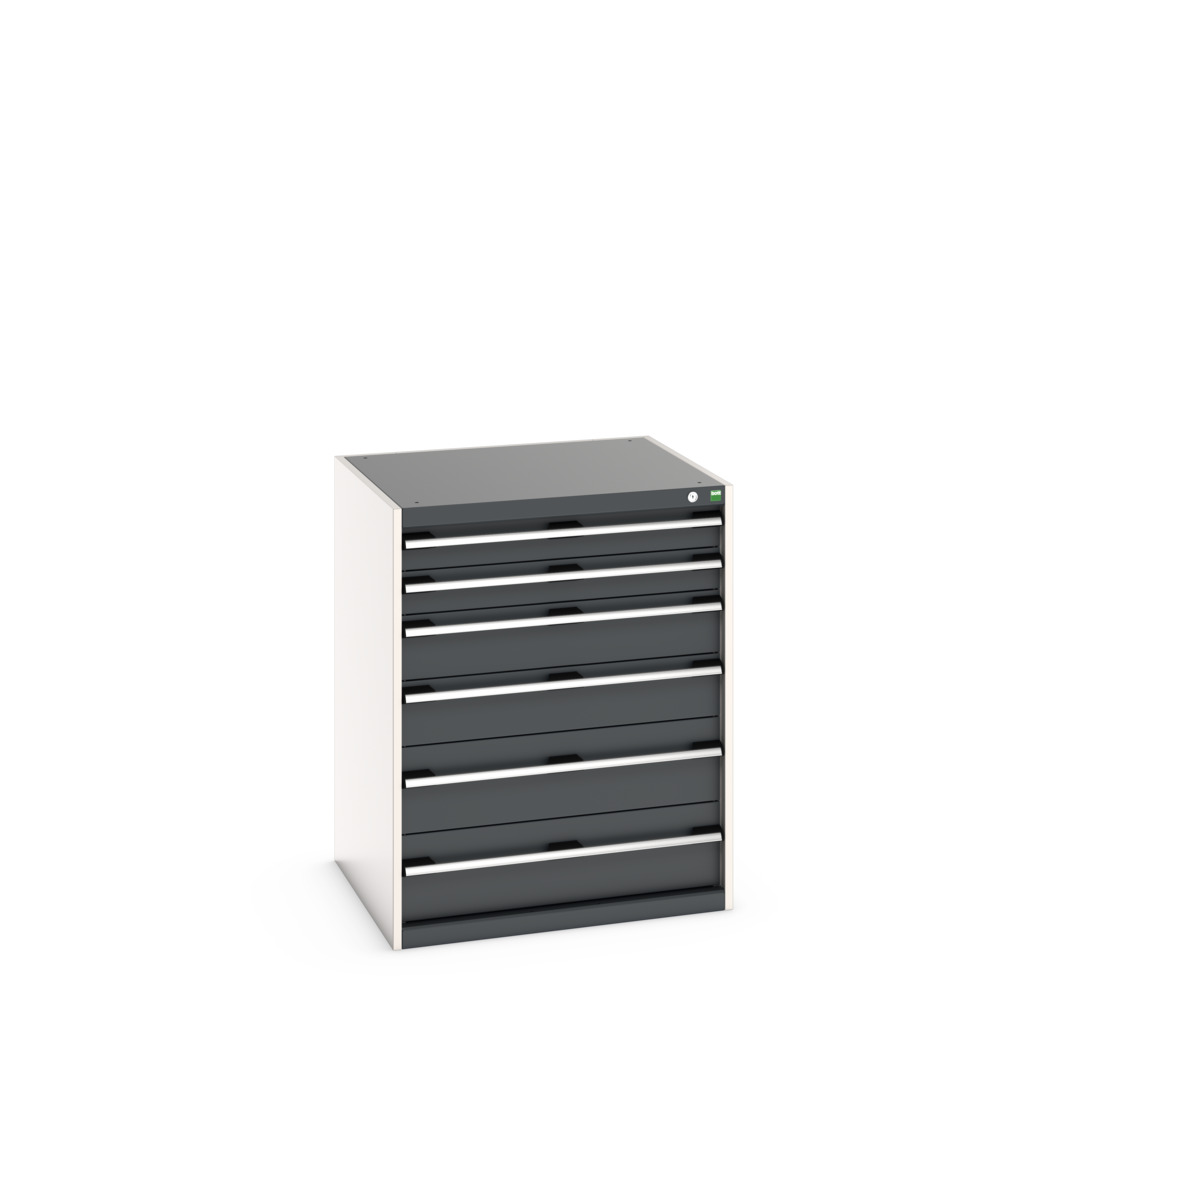 40028020. - cubio drawer cabinet 